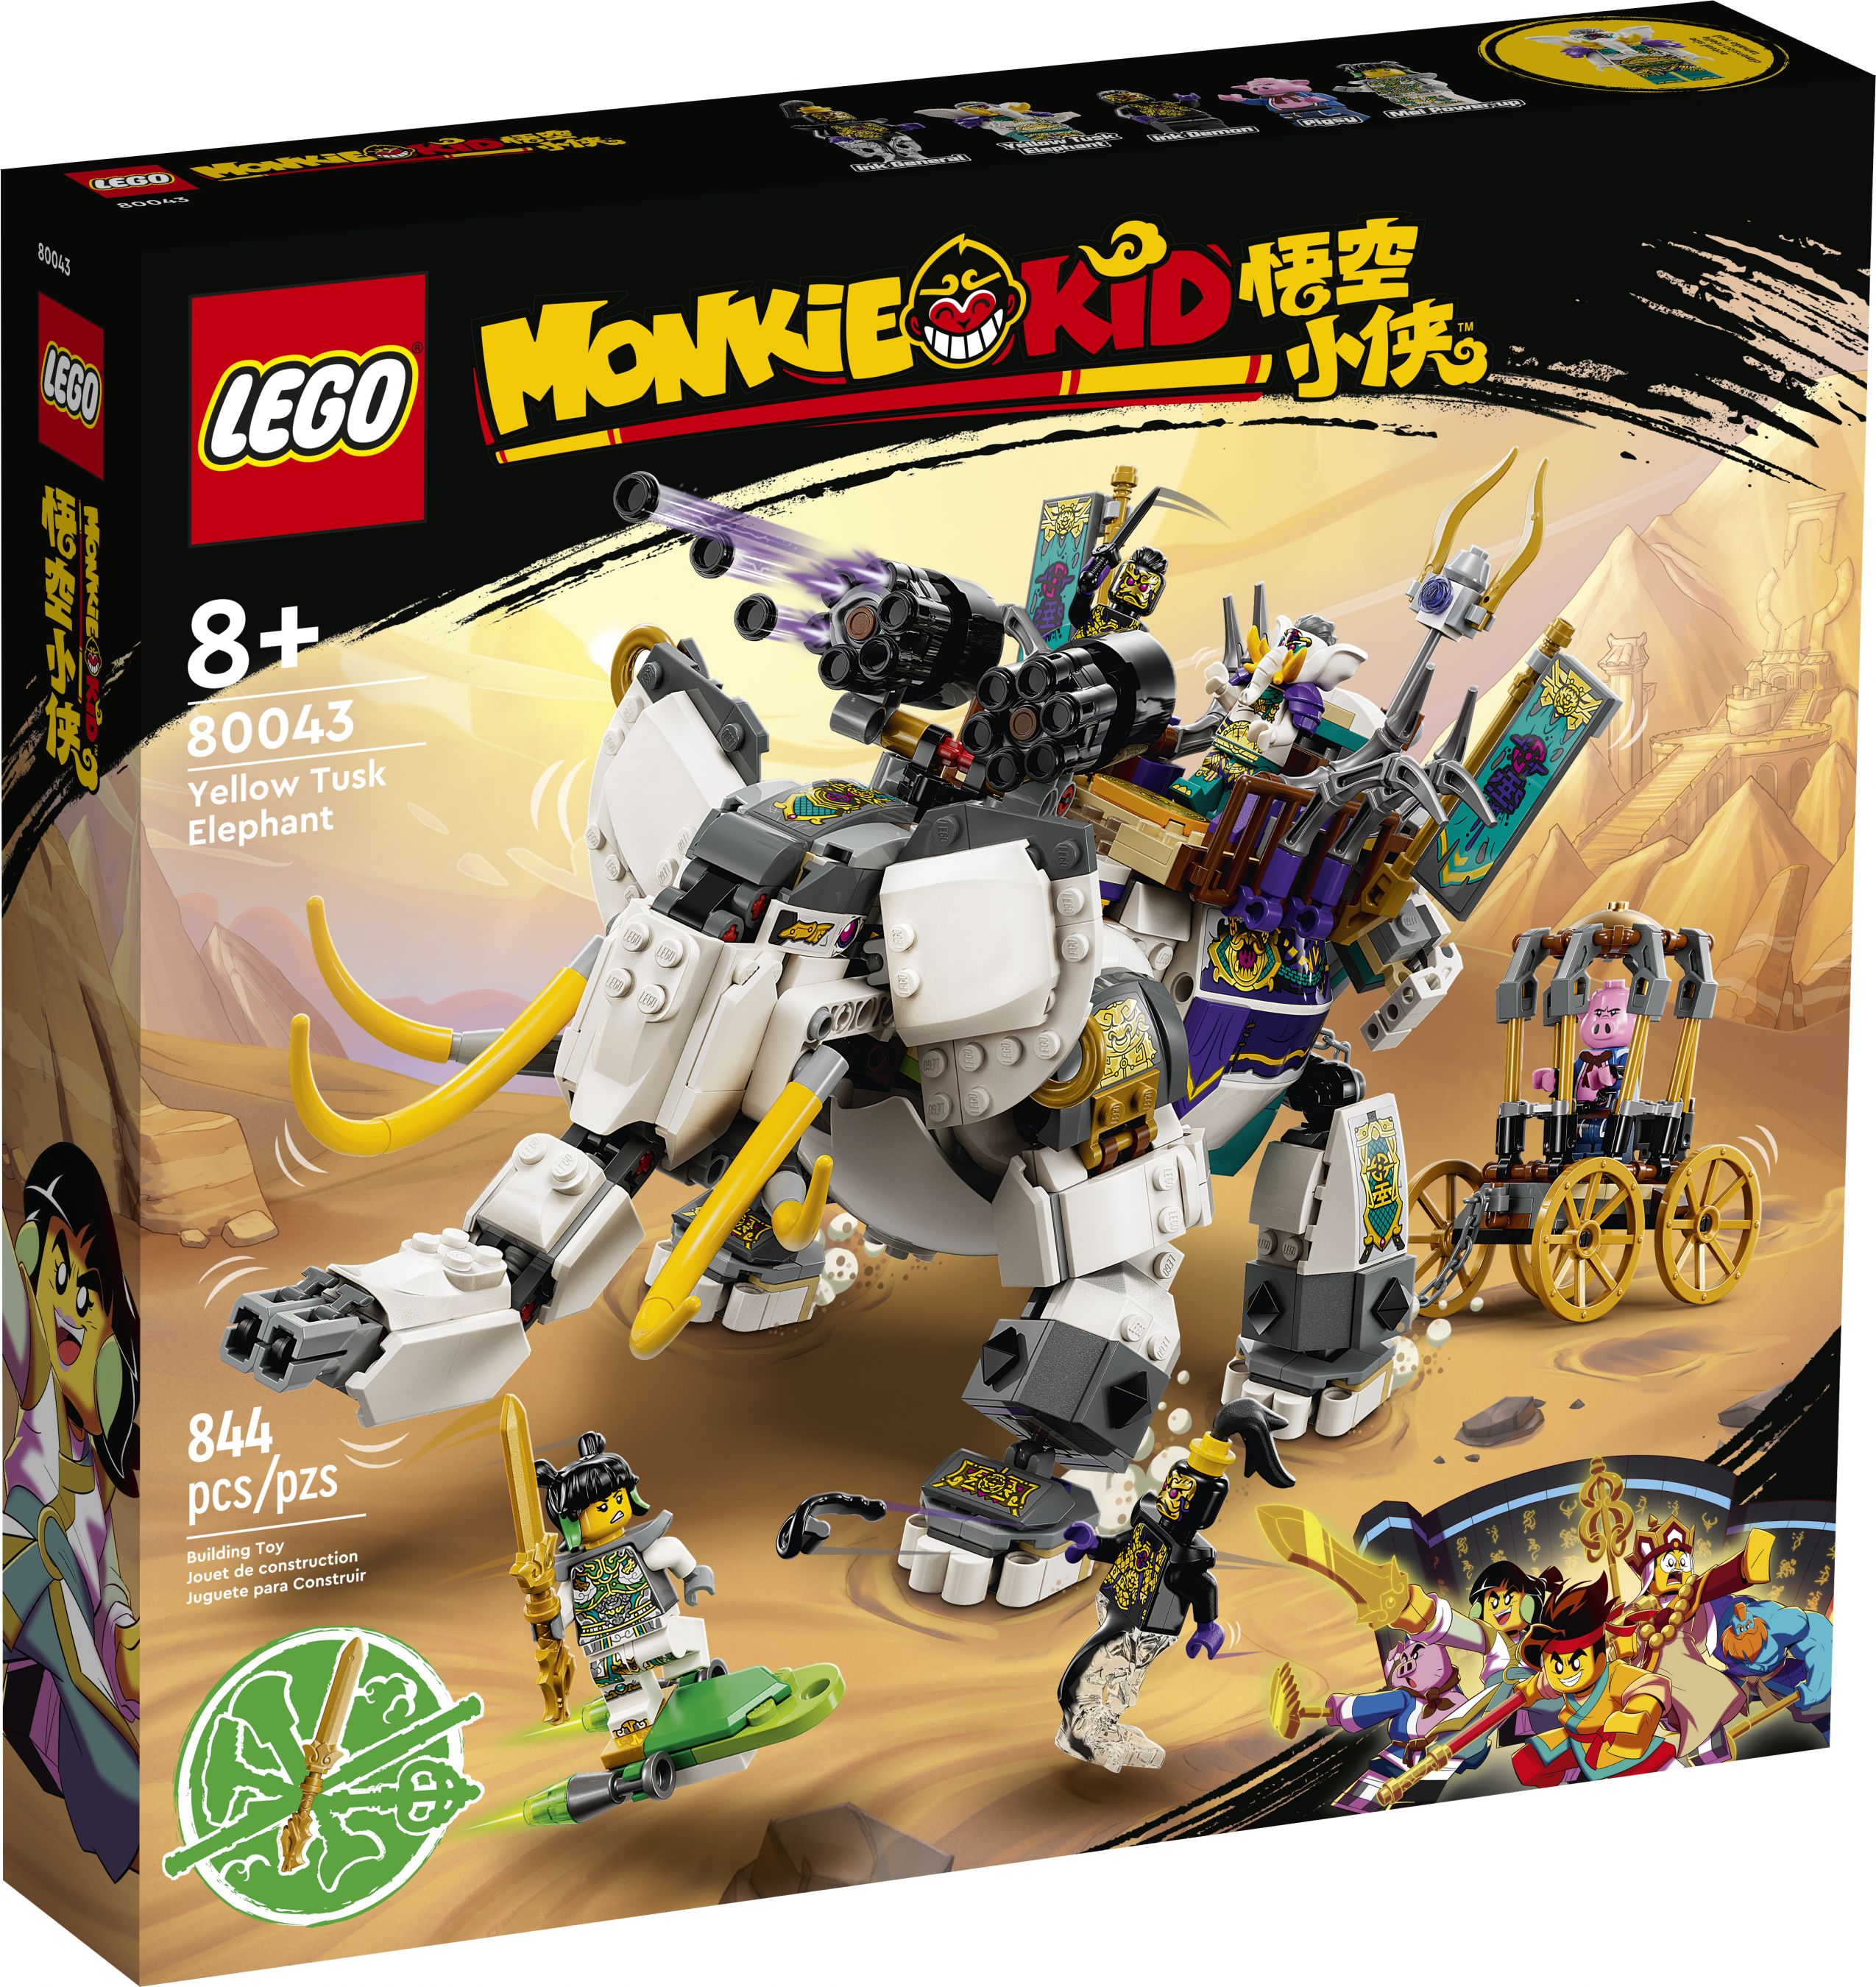 LEGO Monkie Kid 80043 Yellow Tusk Elephant LEGO_80043_Box1_v39.jpg